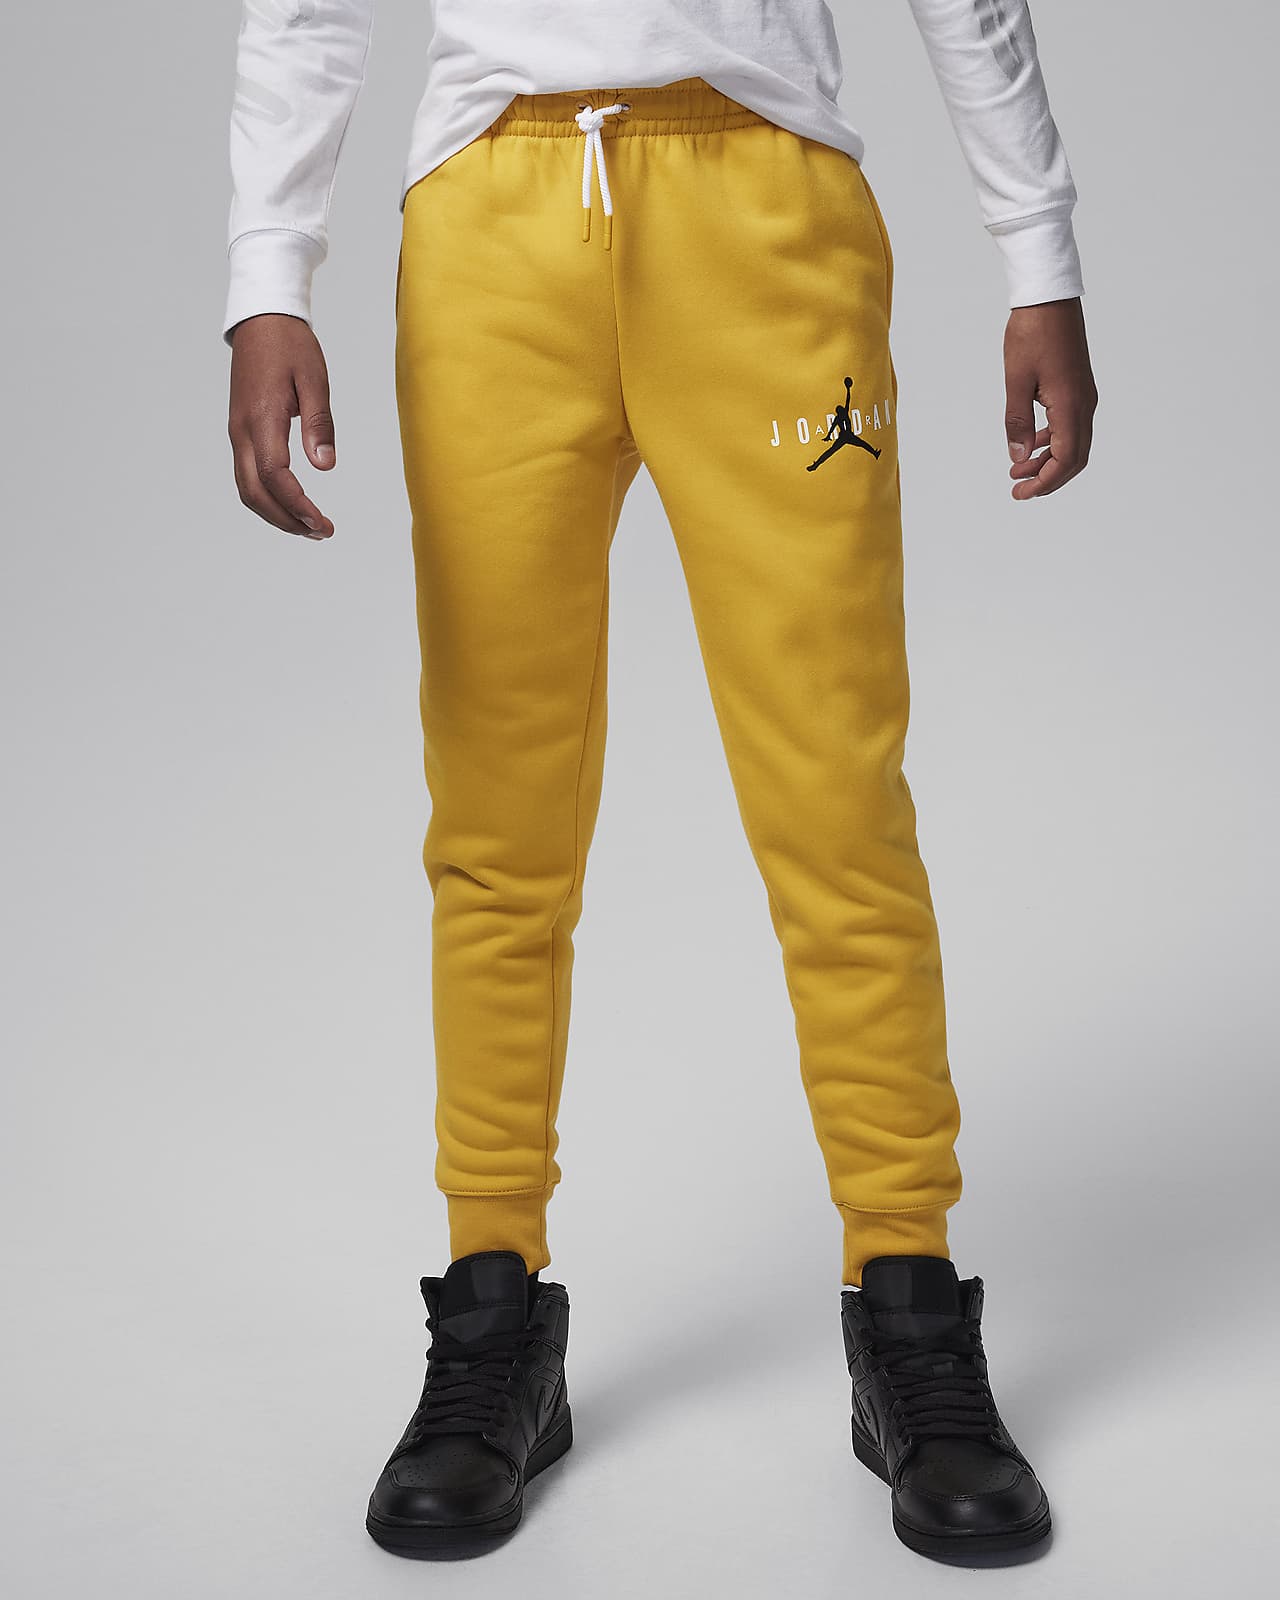 Nike Air Jordan Men's Size S Zip Pocket LOGO Pants RARE | eBay